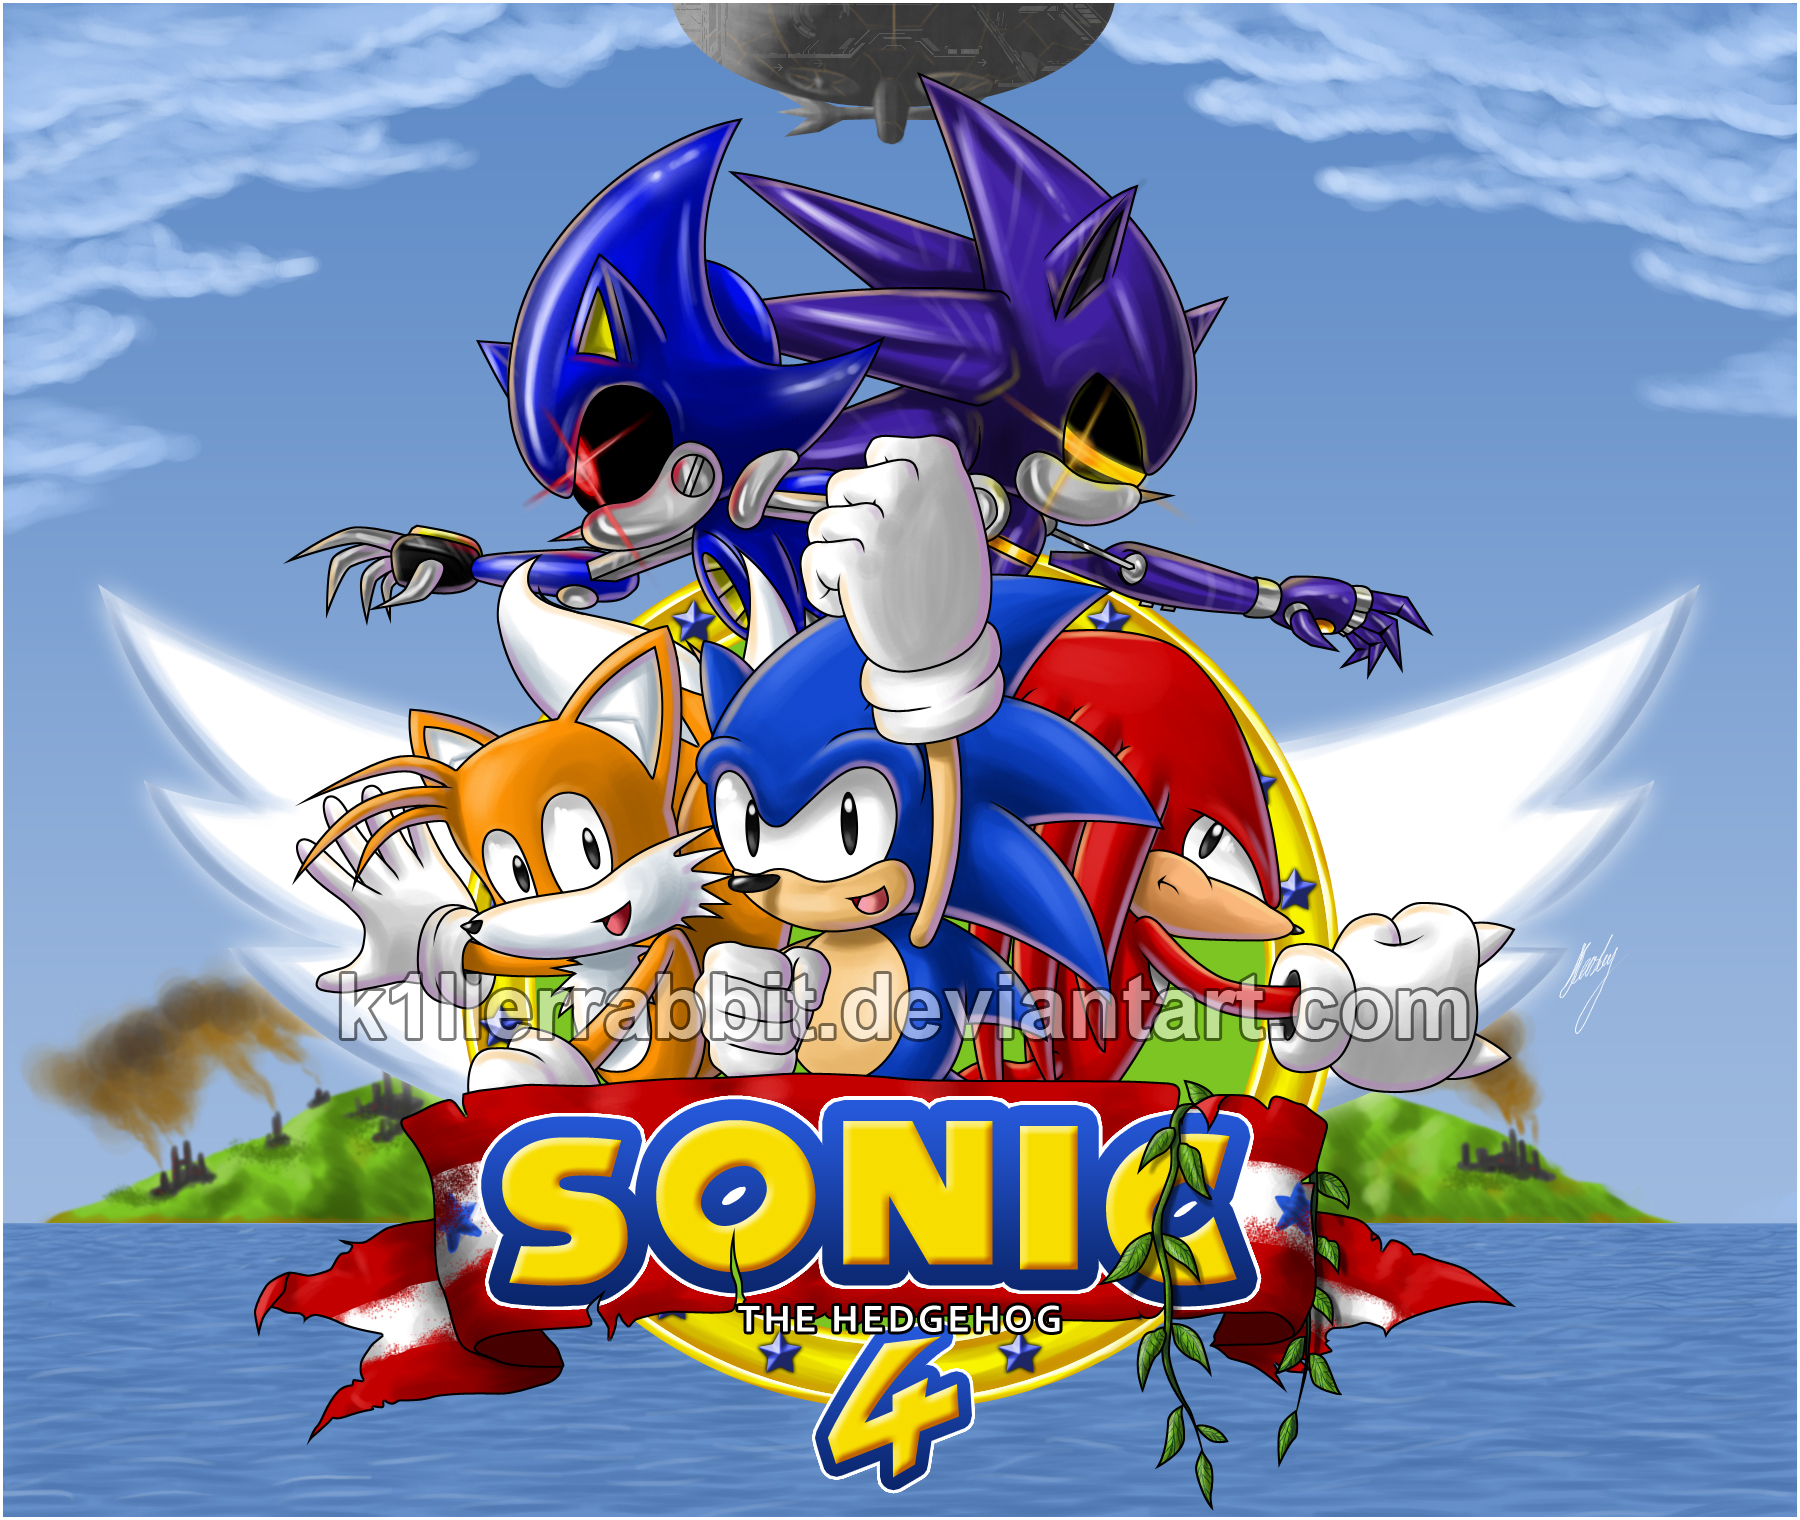 File:Sonic the hedgehog 4 by k1llerrabbit-d20ooza.jpg